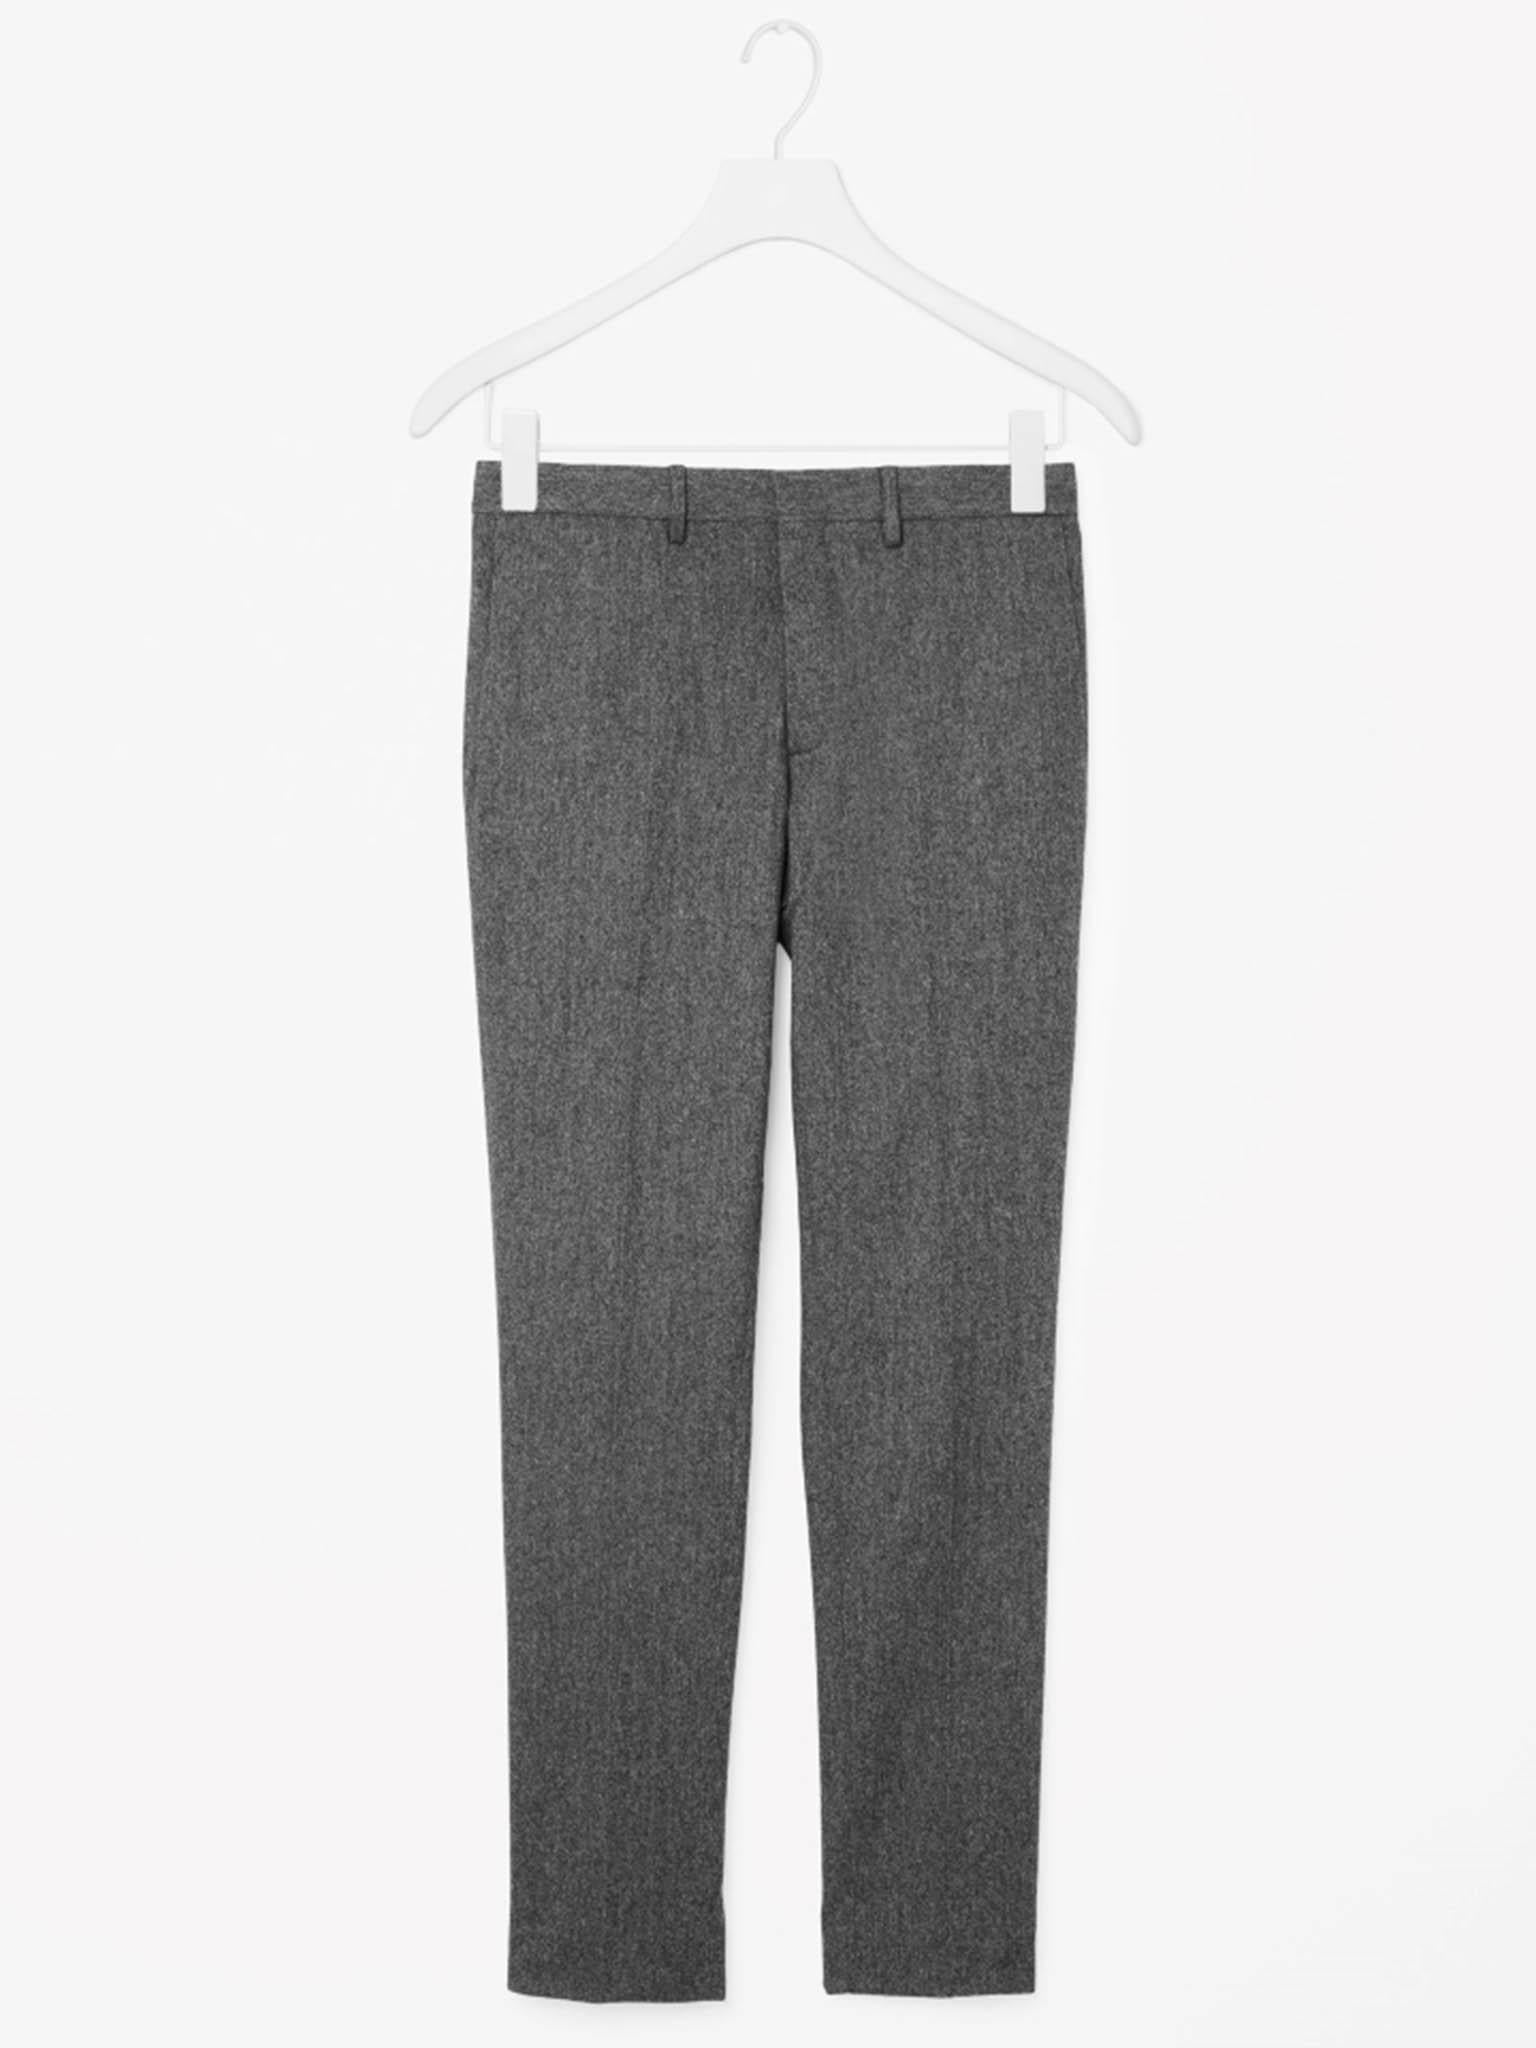 COS wool melagne trousers, £79, cosstores.com